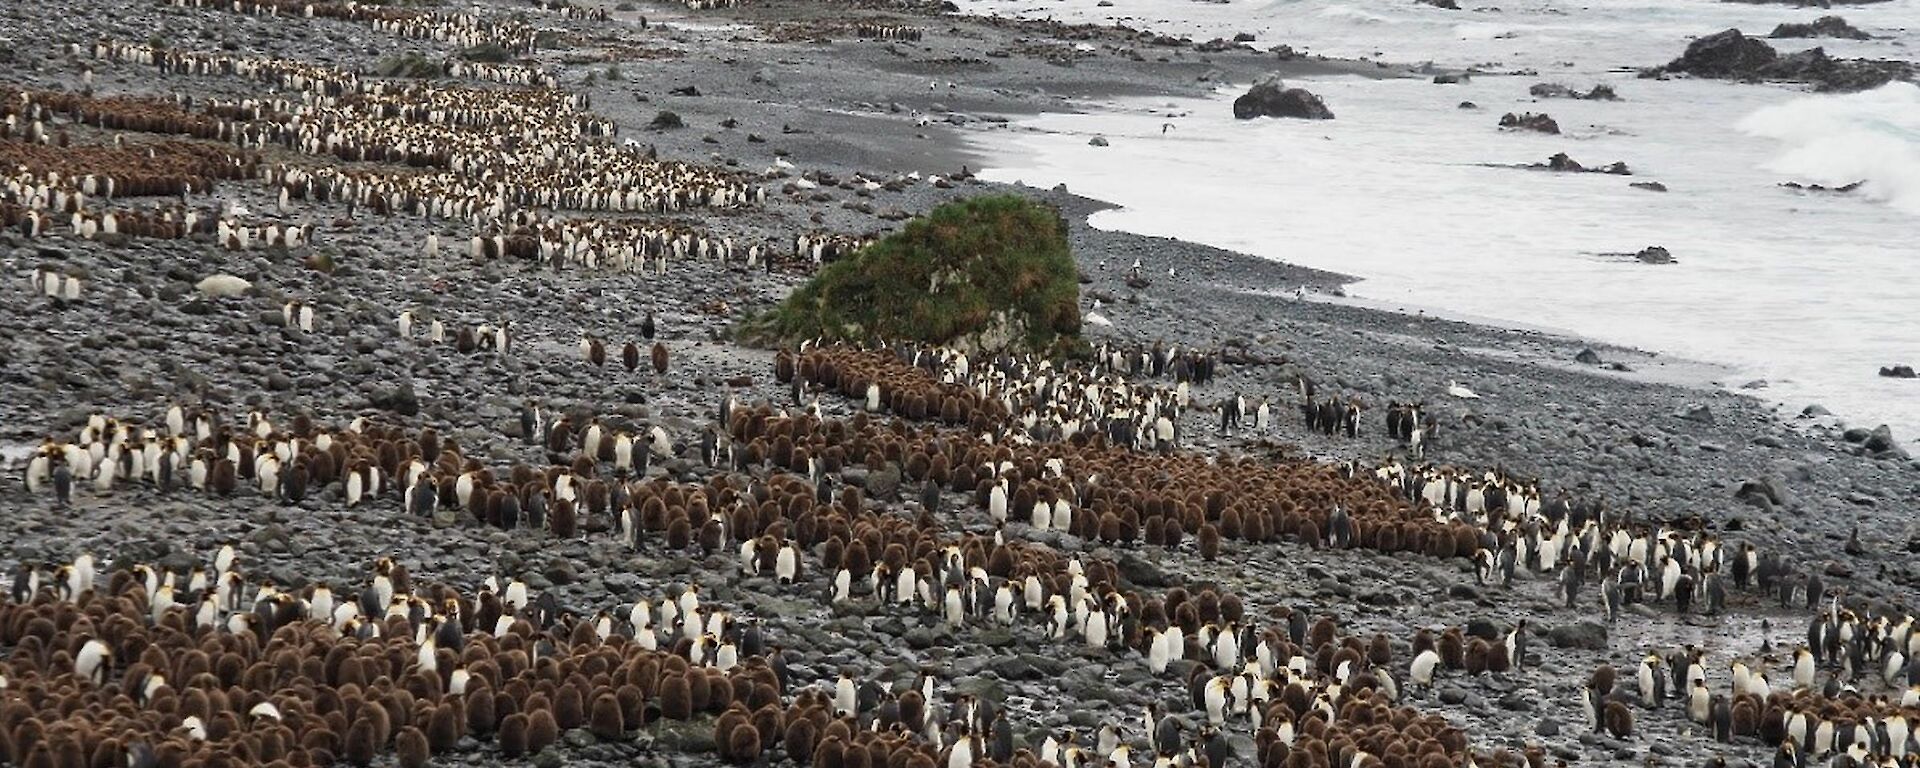 A series of huddled brown penguin chicks along a coastline